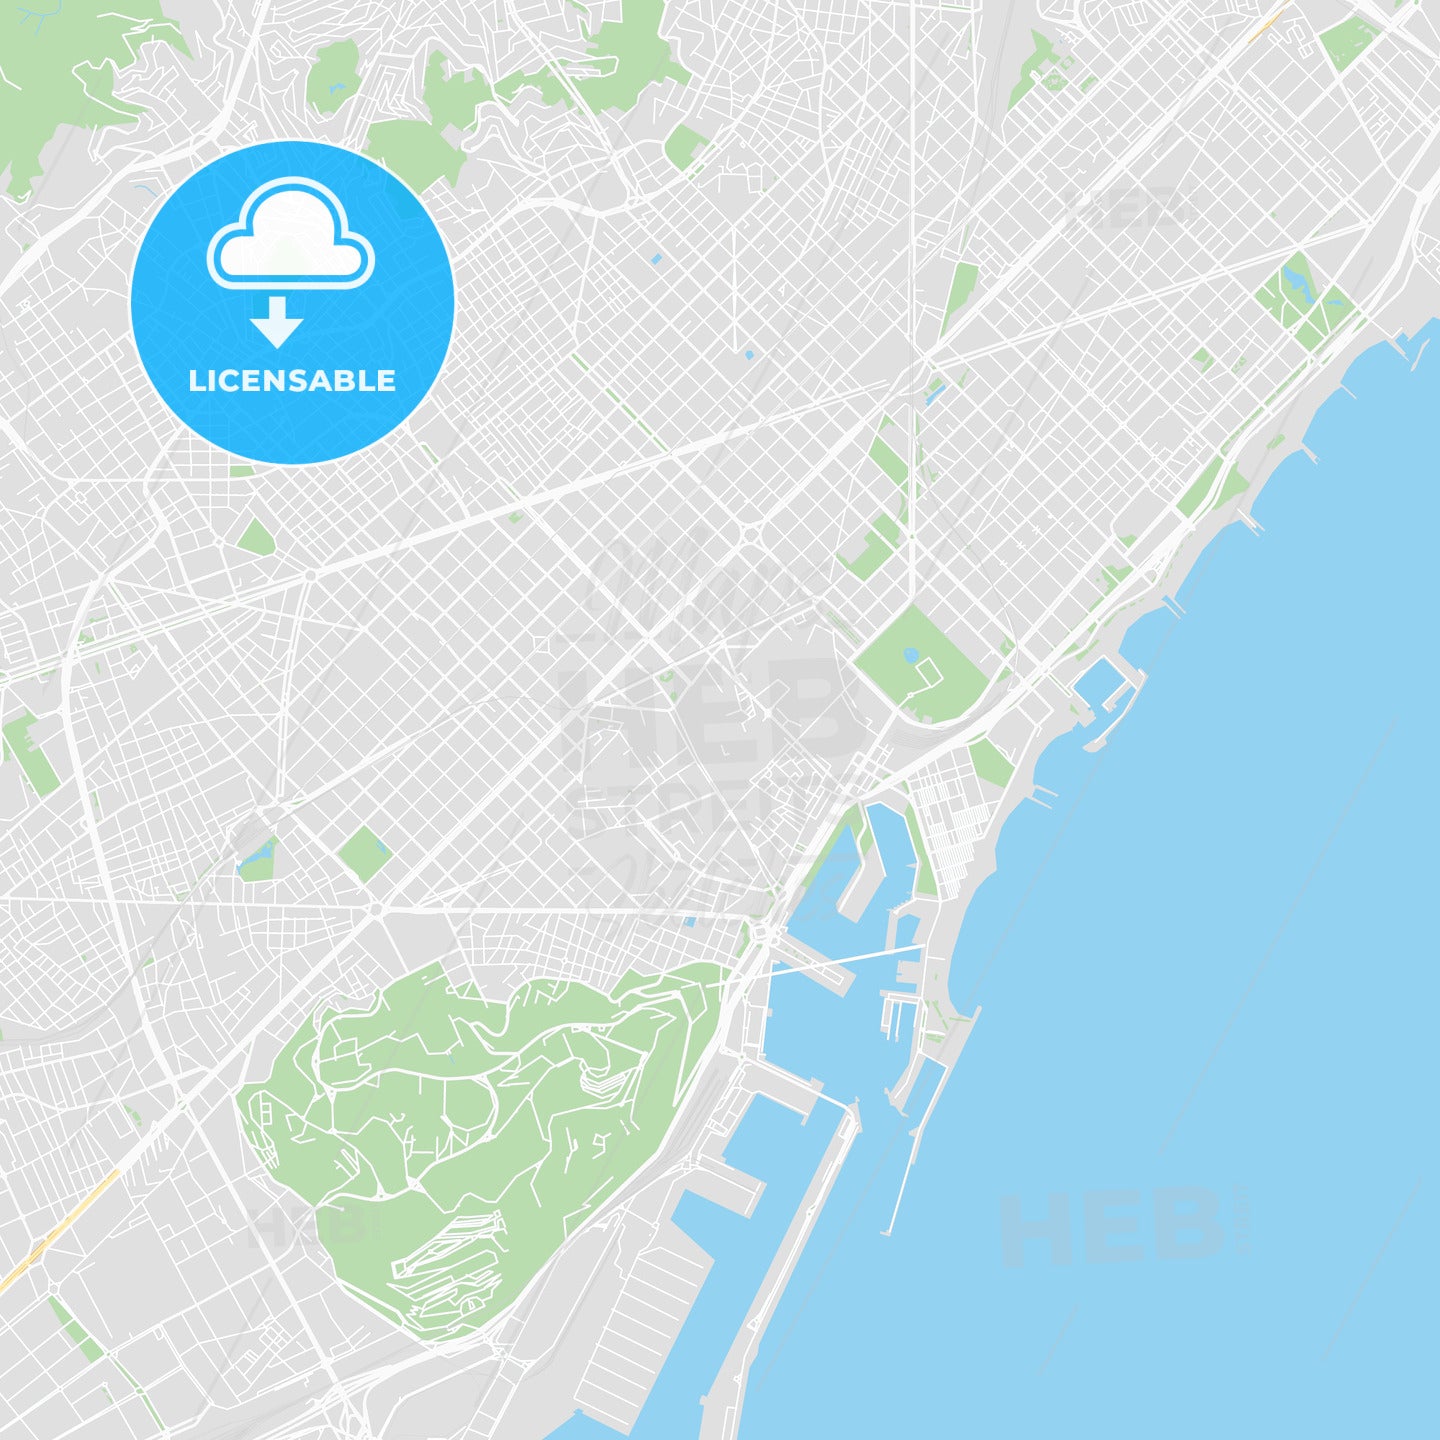 Printable map of Barcelona, Spain